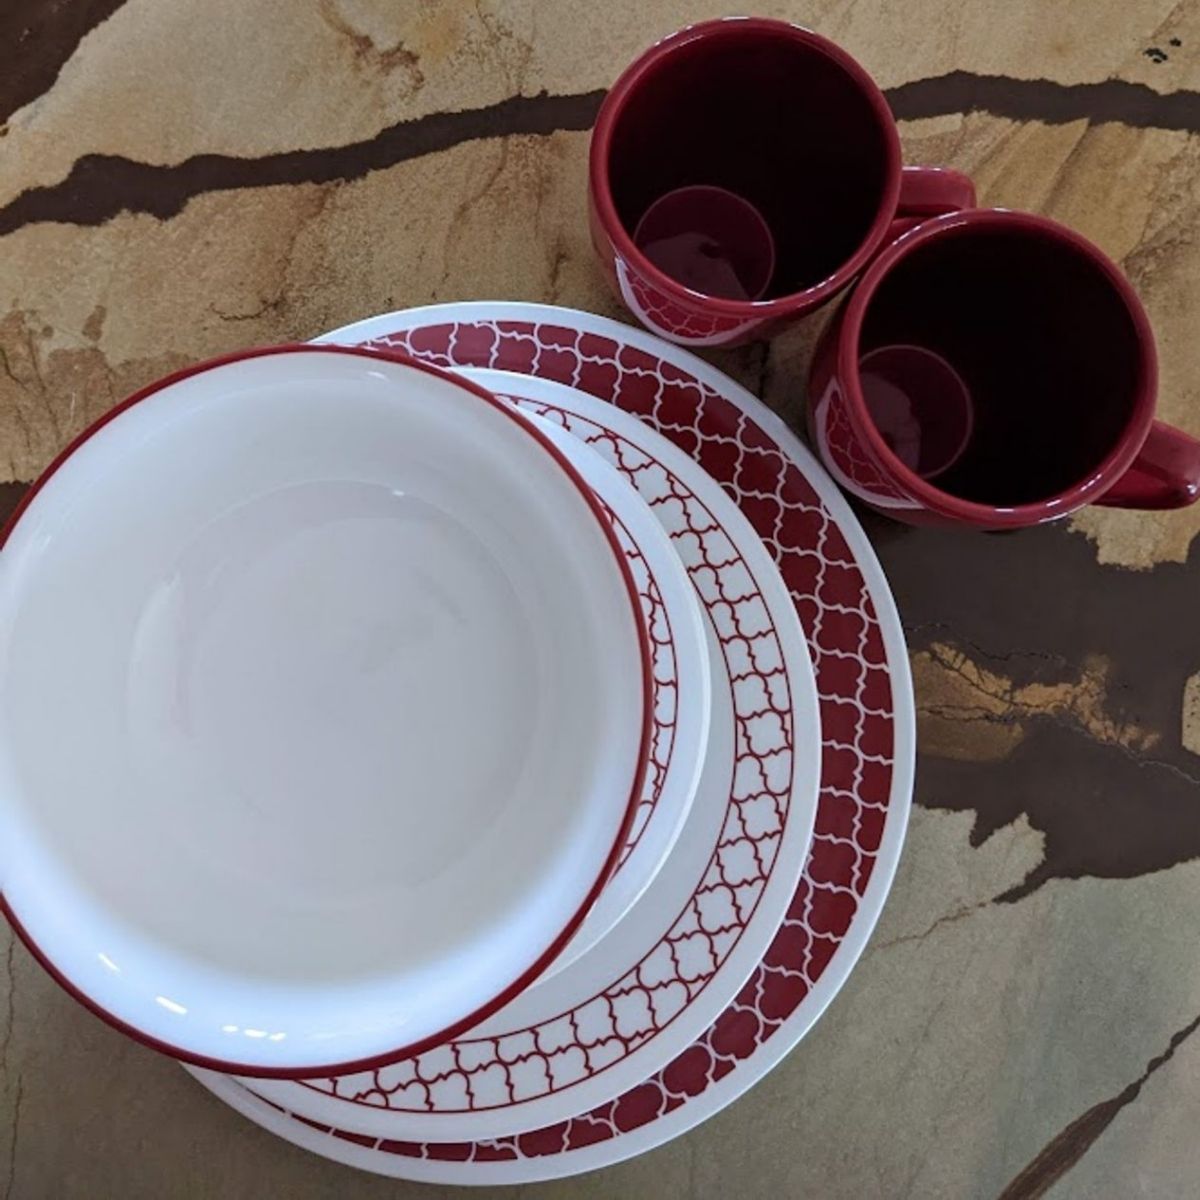 Corelle dish set with a red on white design, called Crimson Trellis.